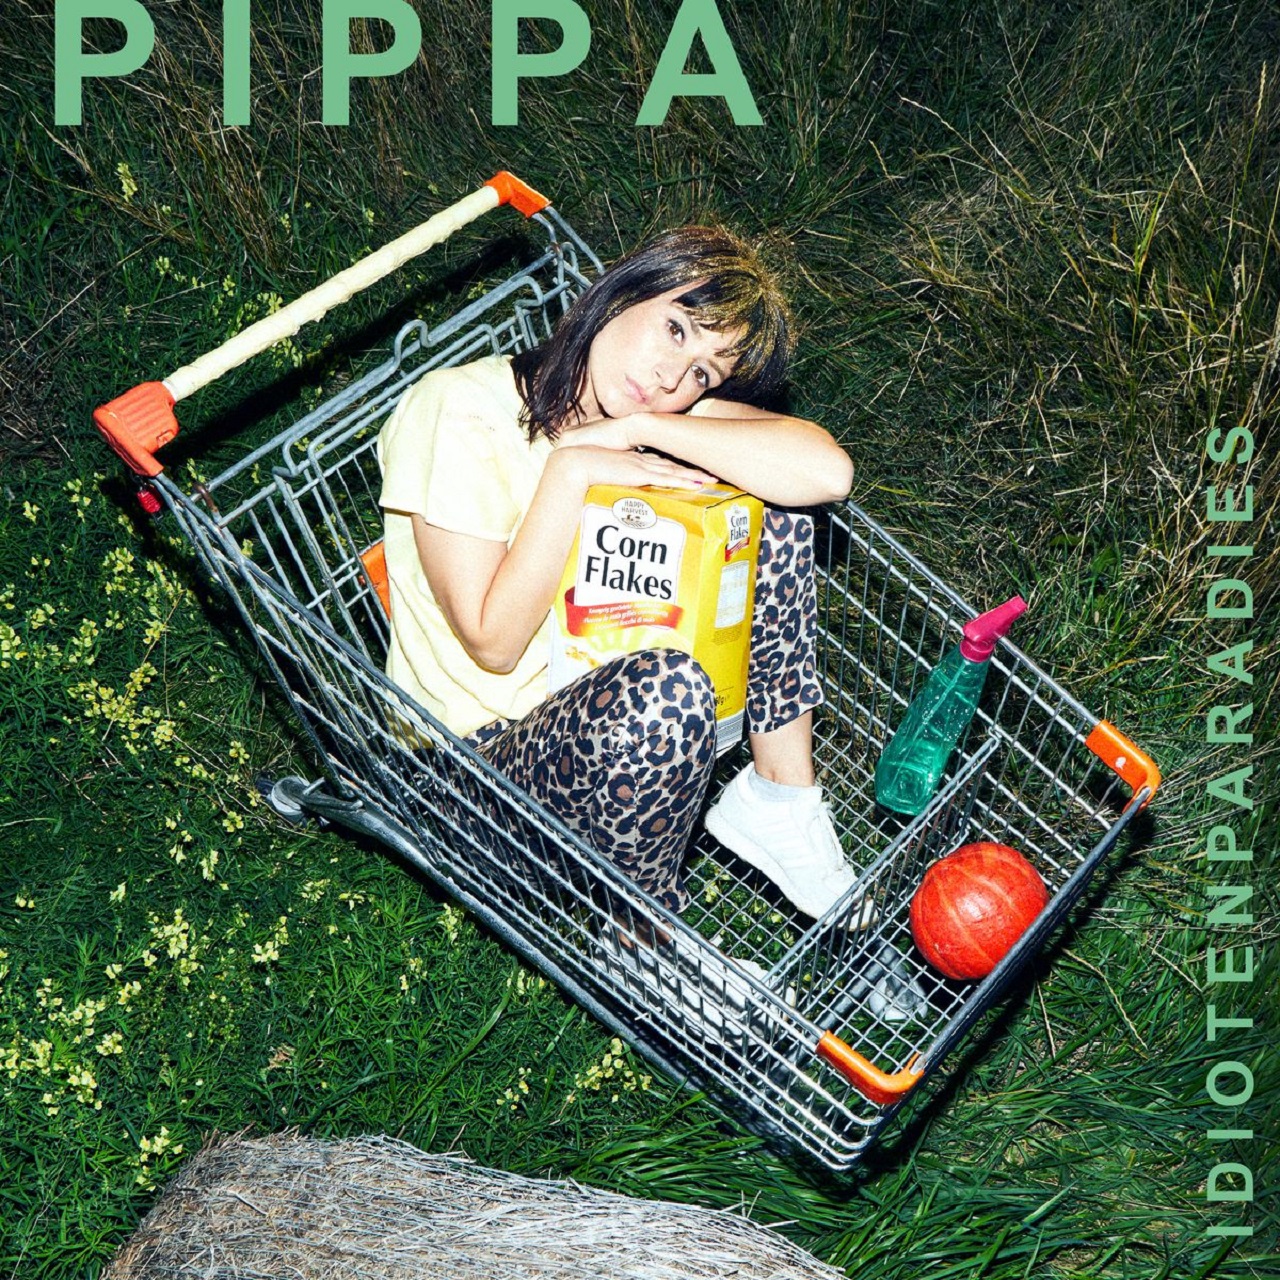 Albumcover "Idiotenparadies" von Pippa